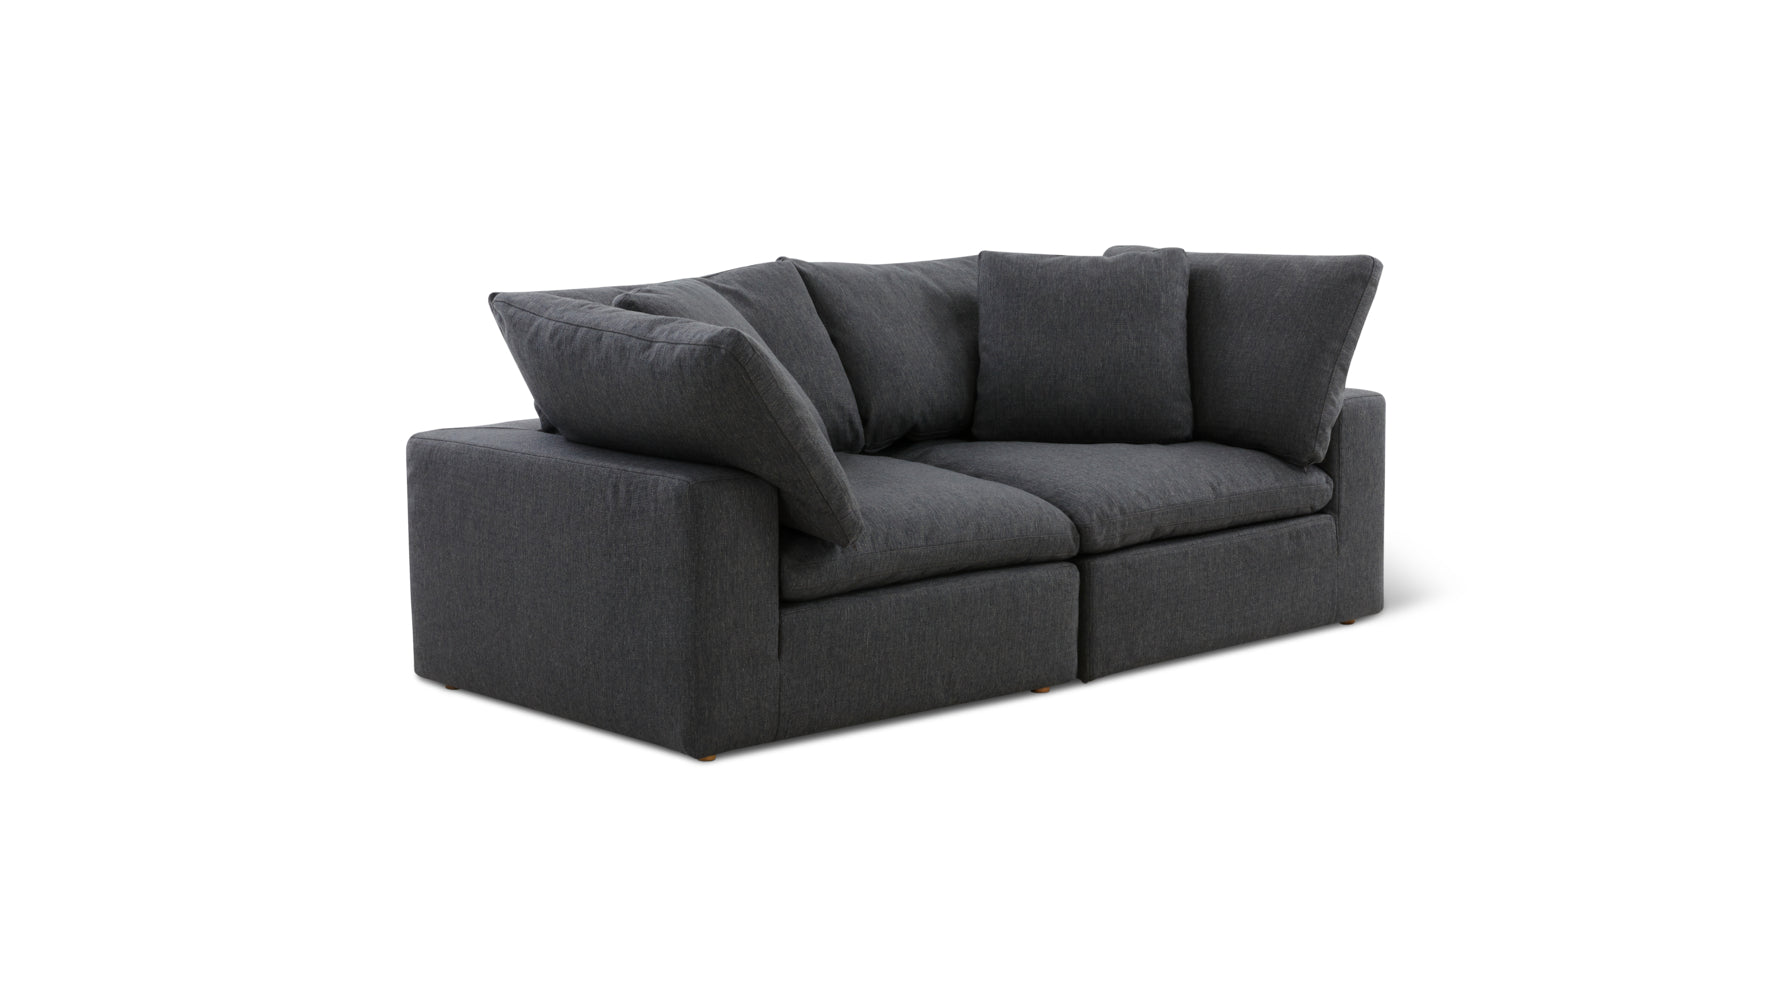 Movie Night™ 2-Piece Modular Sofa, Standard, Dark Shadow - Image 2